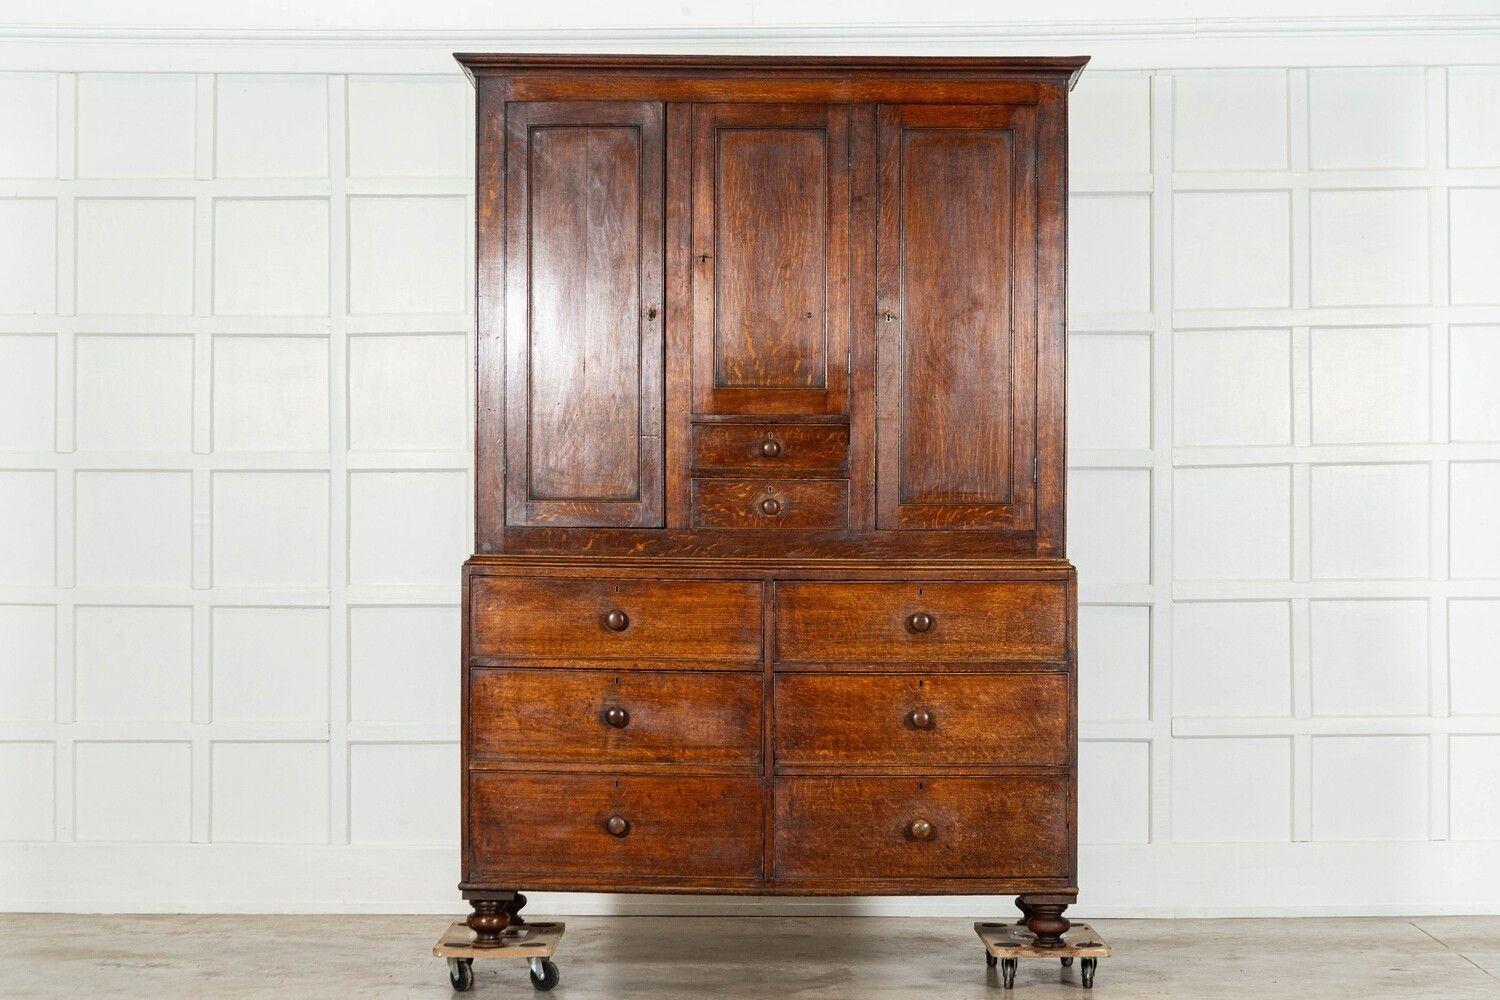 circa 1820
Large Georgian English Oak Linen Press Cupboard
sku 1786
Base W152 x D62 x H97 cm
Top W157 x D63 x H125 cm
Together W157 x D63 x H222 cm
Weight 145 kg